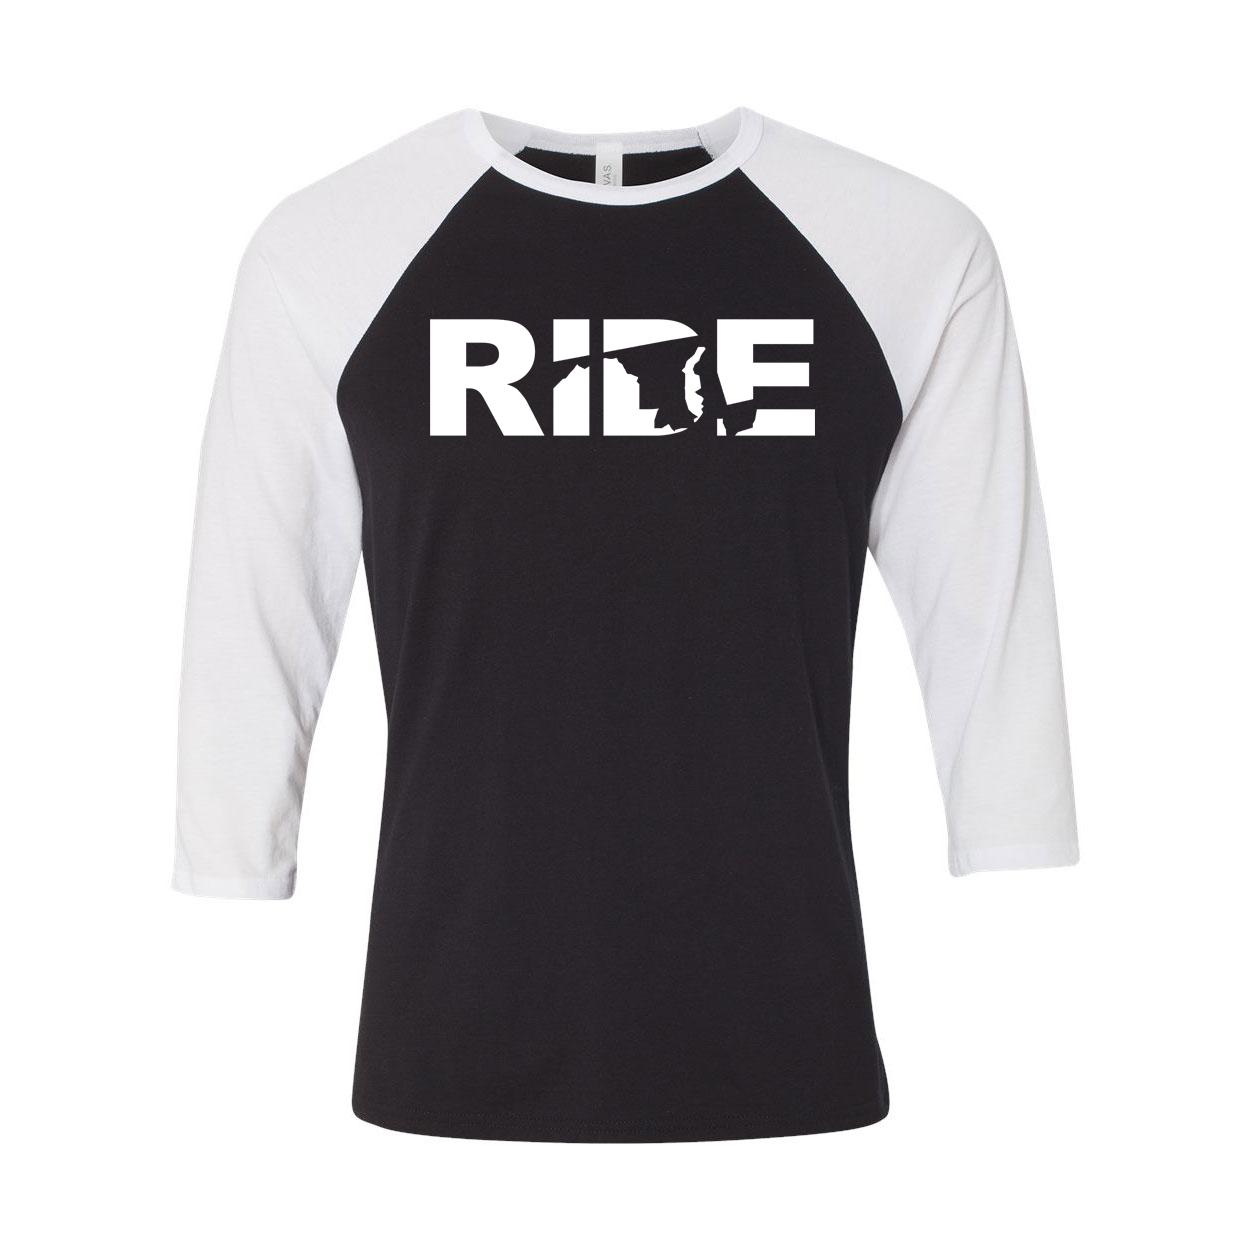 Ride Maryland Classic Raglan Shirt Black/White (White Logo)